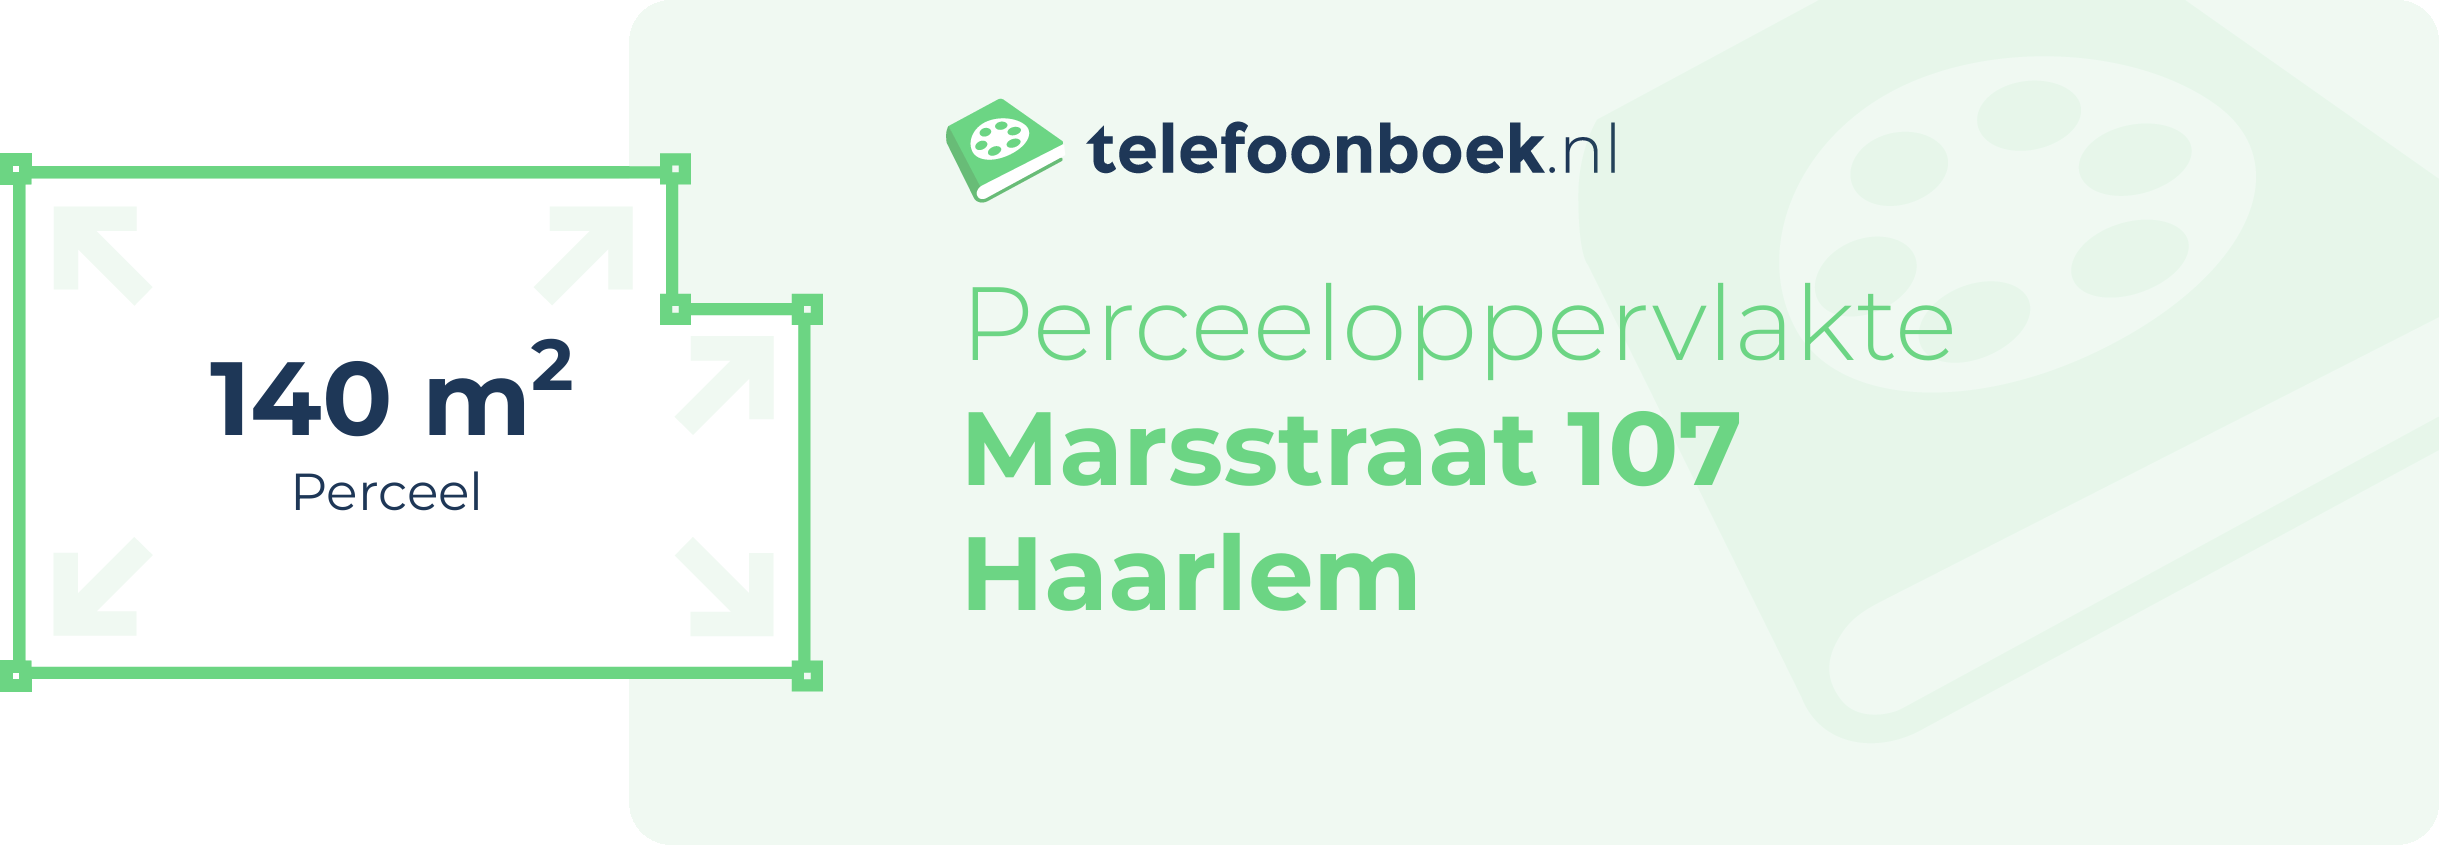 Perceeloppervlakte Marsstraat 107 Haarlem